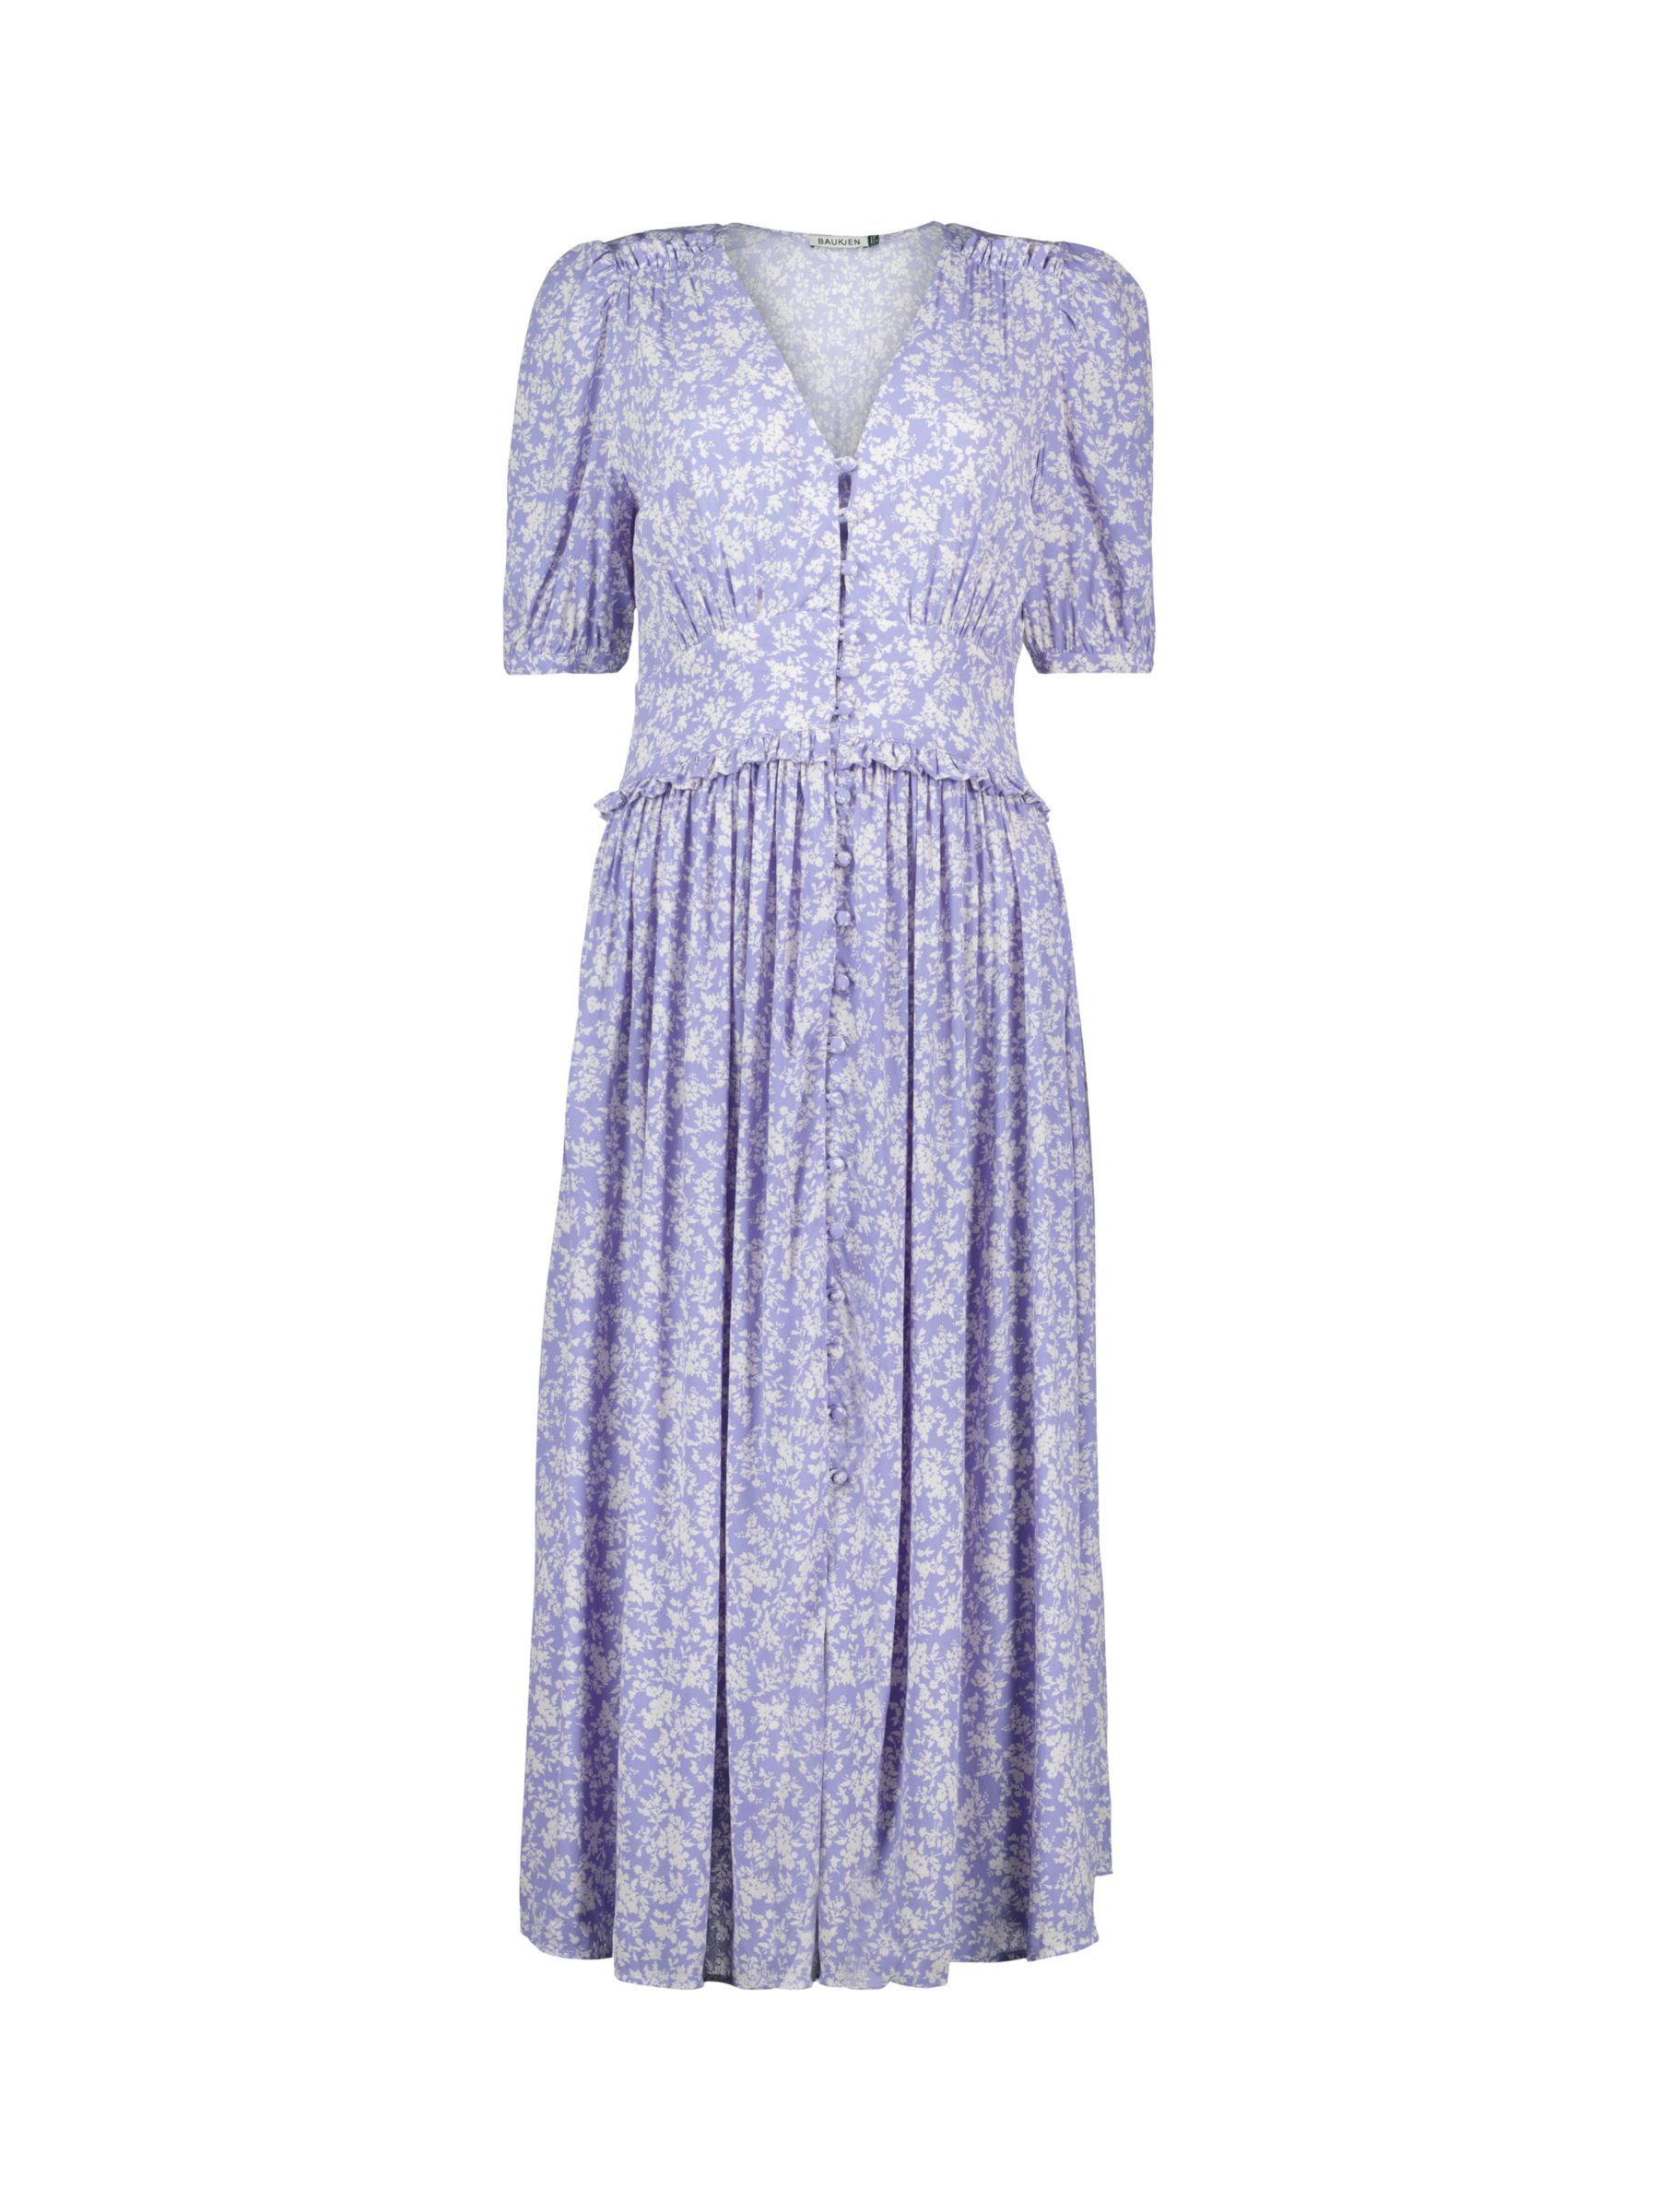 Baukjen Suzy Curved Waist Floral Midi Dress, Pale Lavender, 12